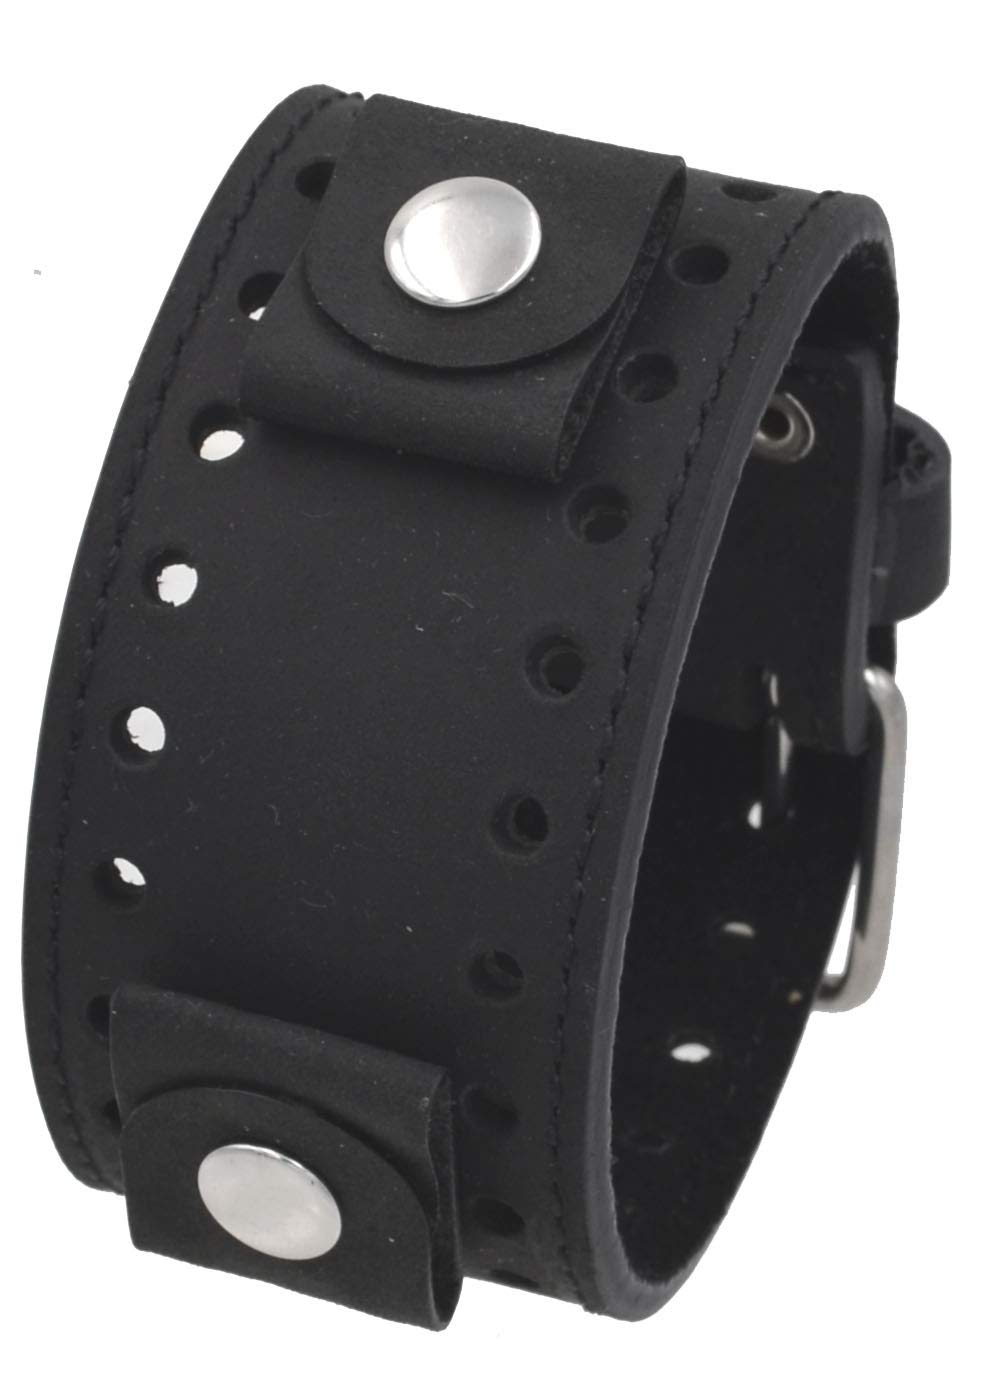 REV Crazy Horse Leather Strap Lug Width Wide Black Cuff Watch Band CHO-K 20mm -22mm